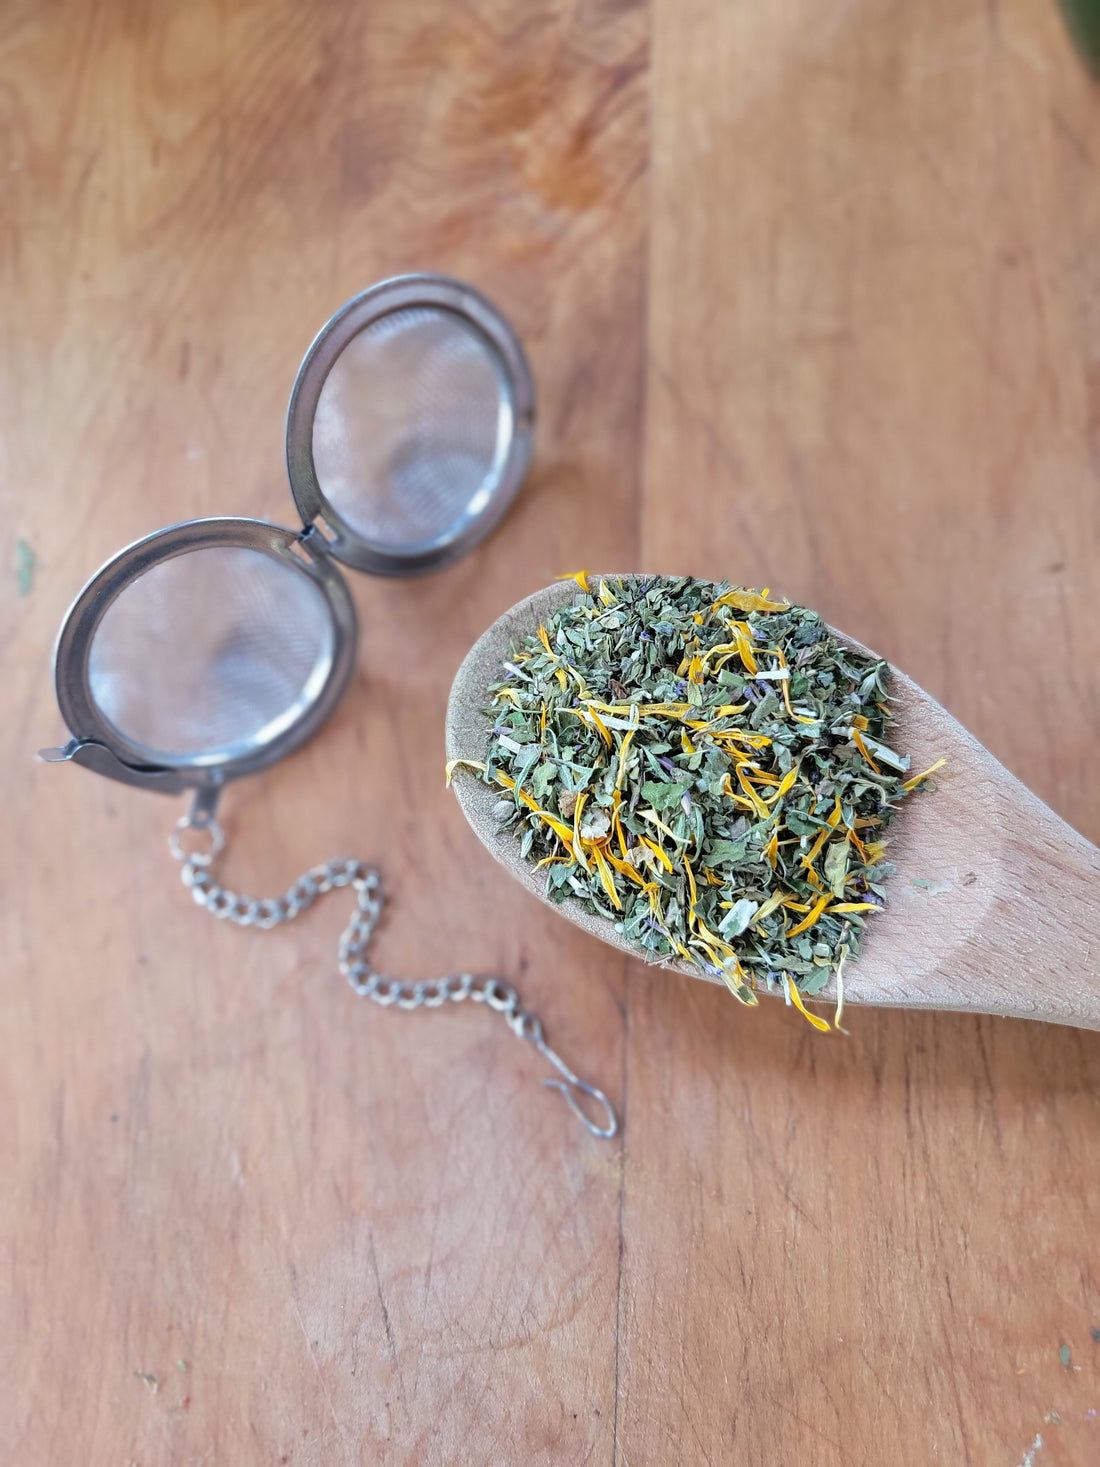 Loose Leaf Organic Digestive Tea Blend with Tea Strainer